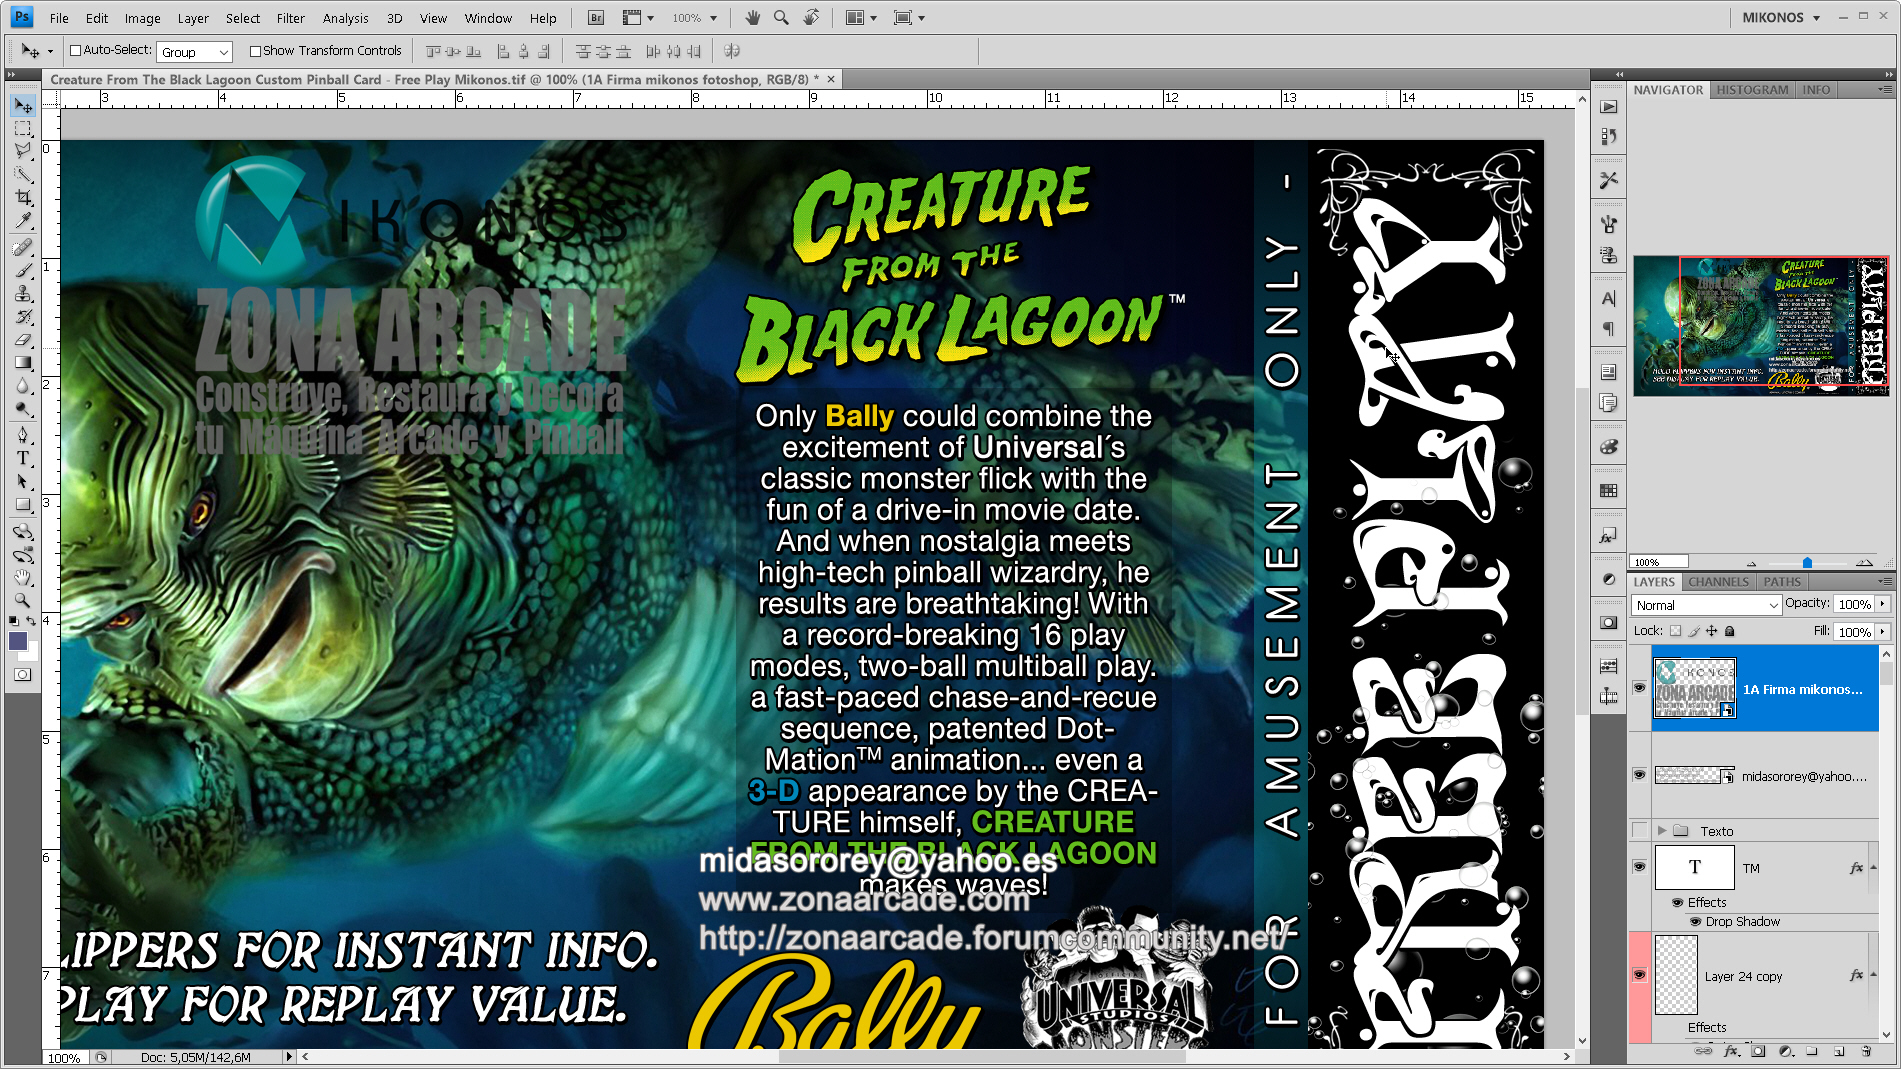 Creature From The Black Lagoon%20Custom%20Pinball%20Card%20-%20Free Play.%20Mikonos2